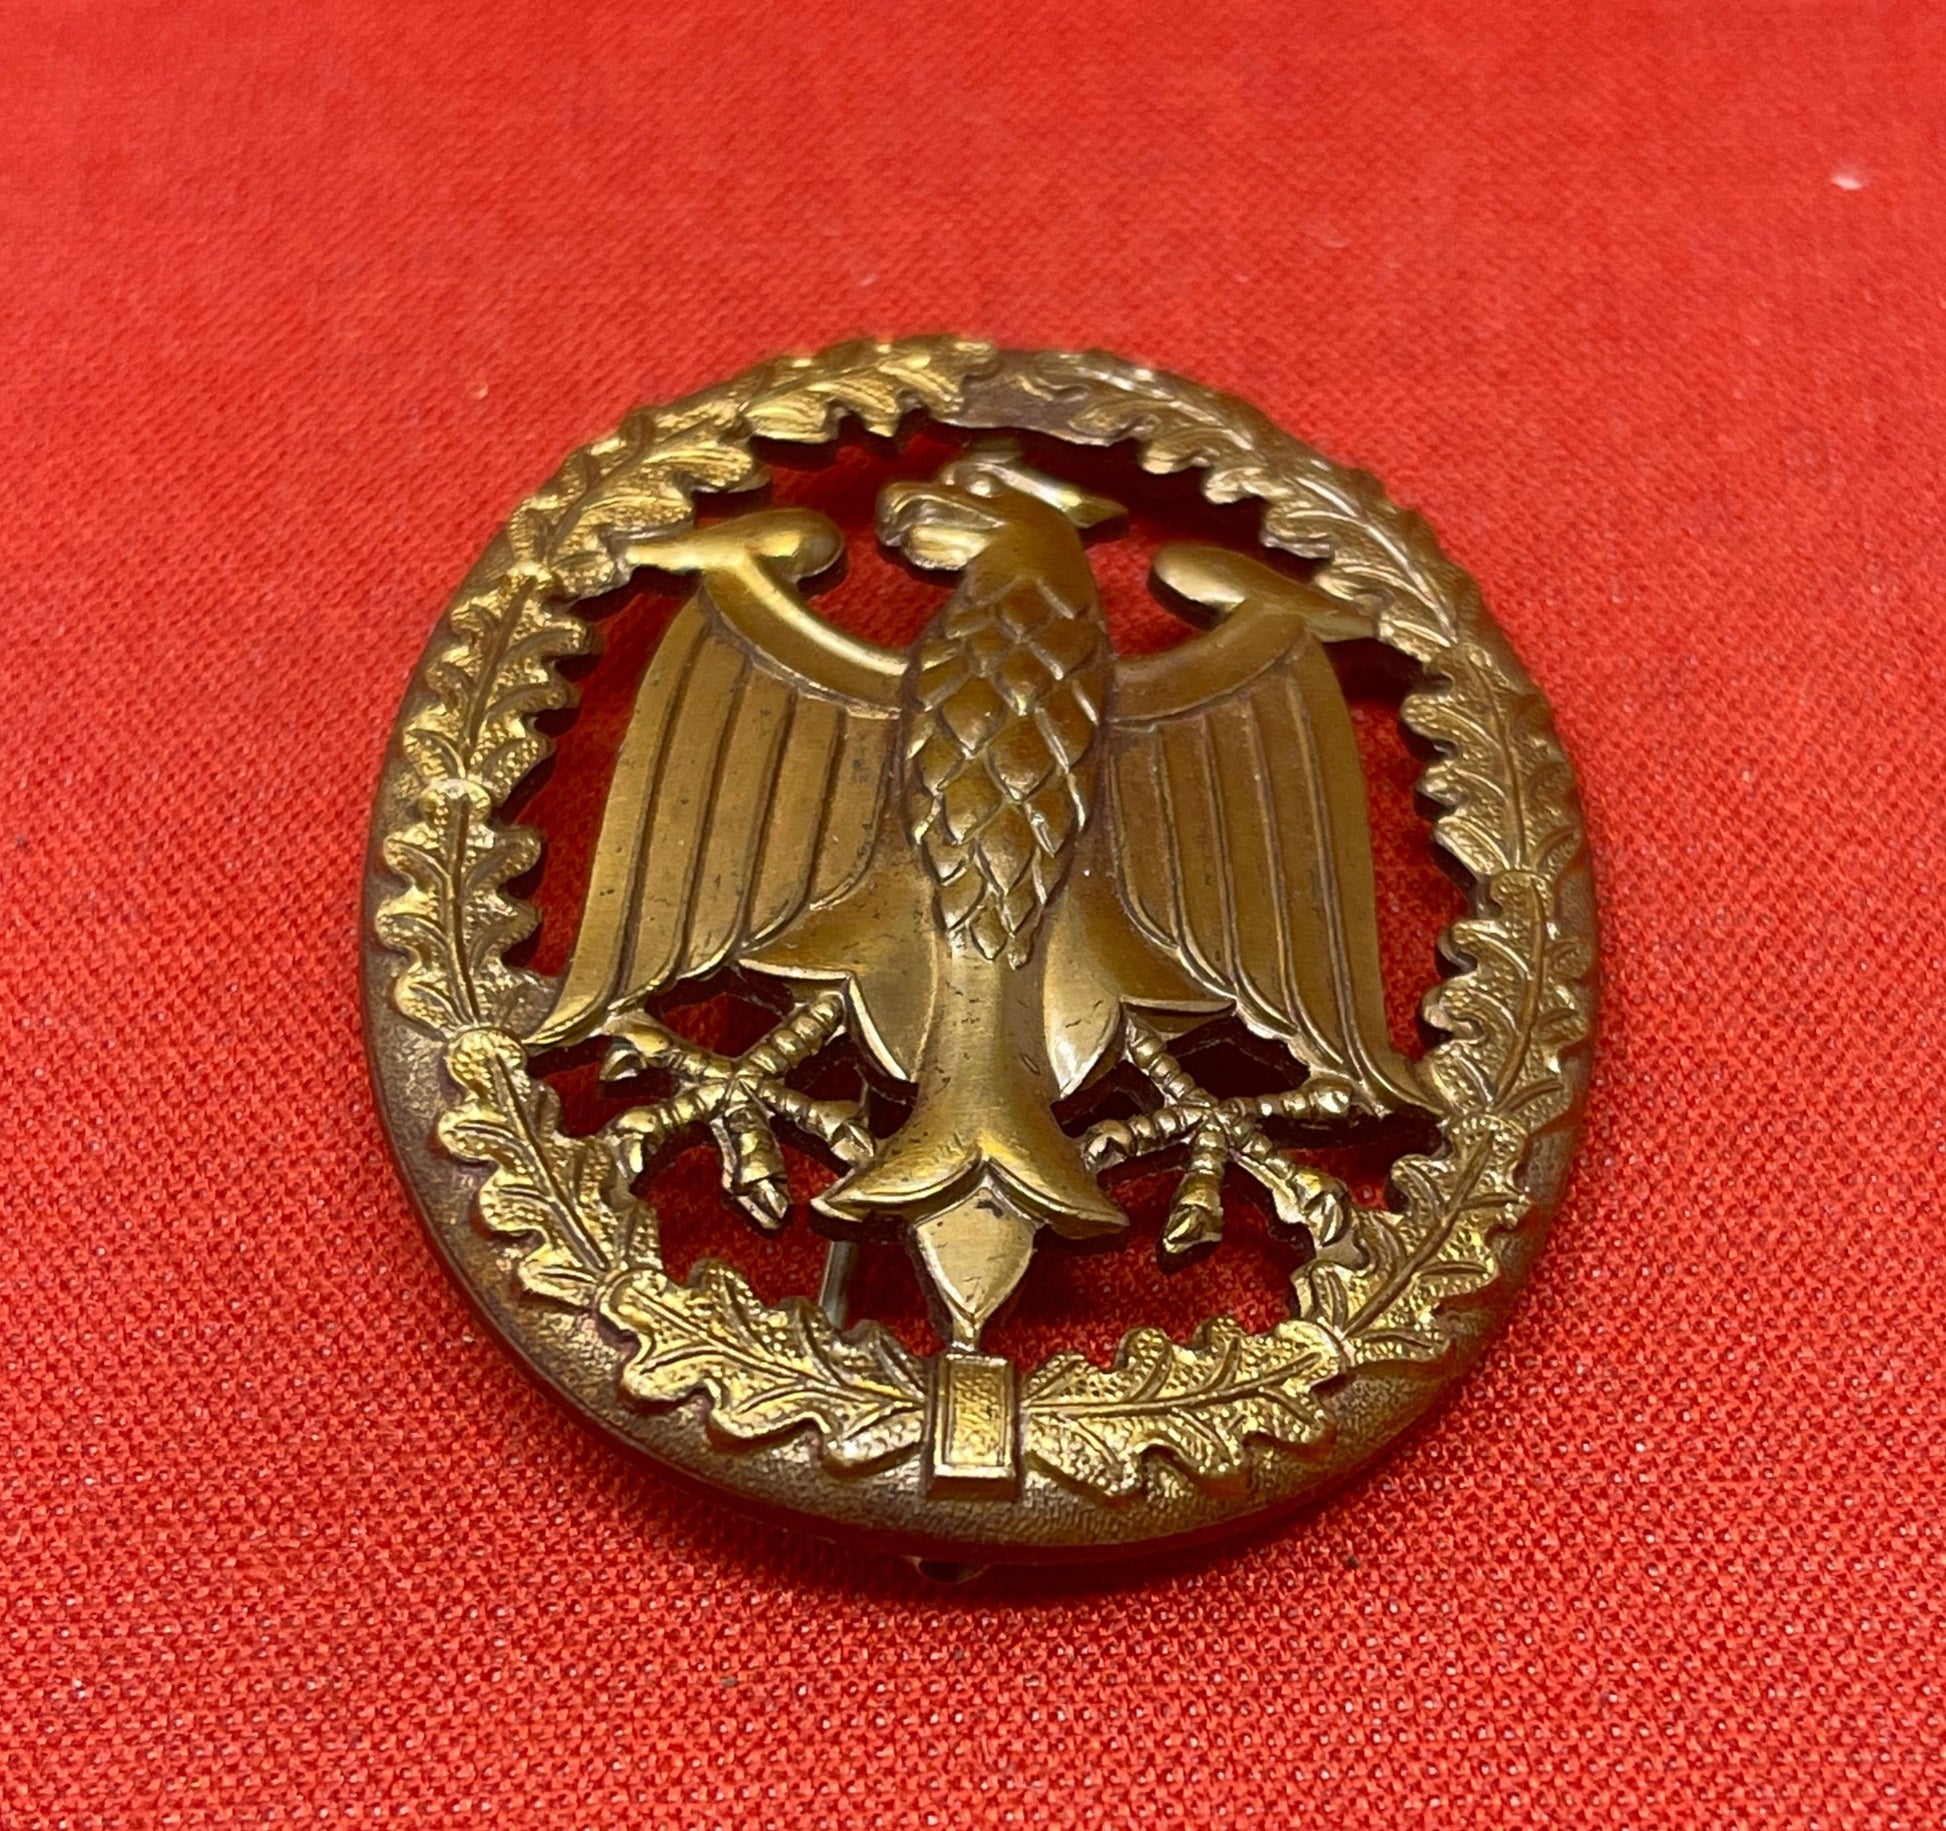 German Bundeswehr Proficiency Badge 3rd Class